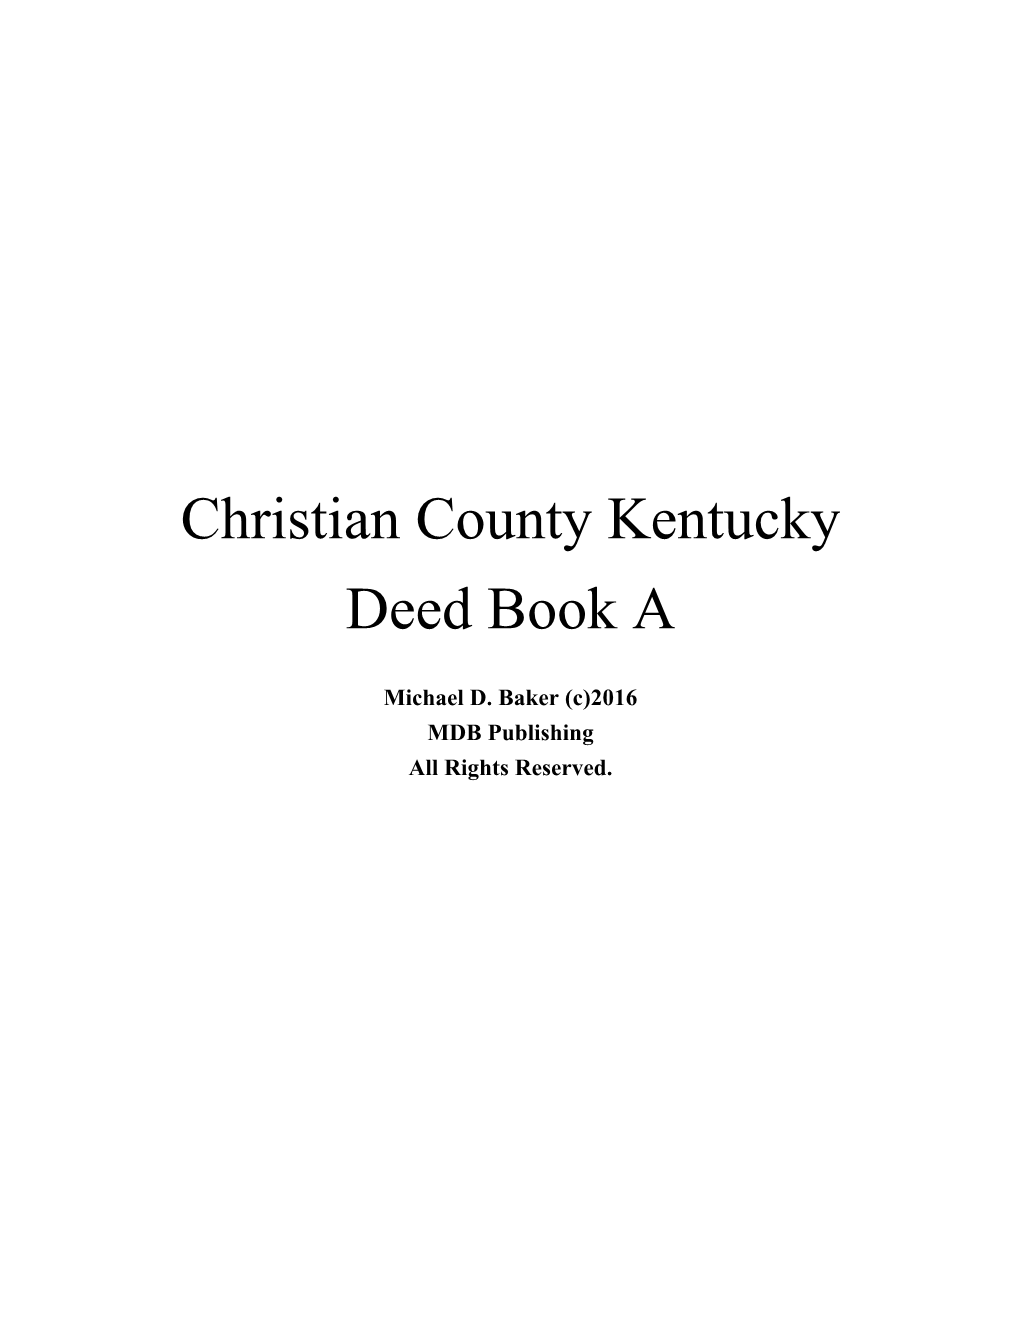 Christian County Kentucky Deed Book A